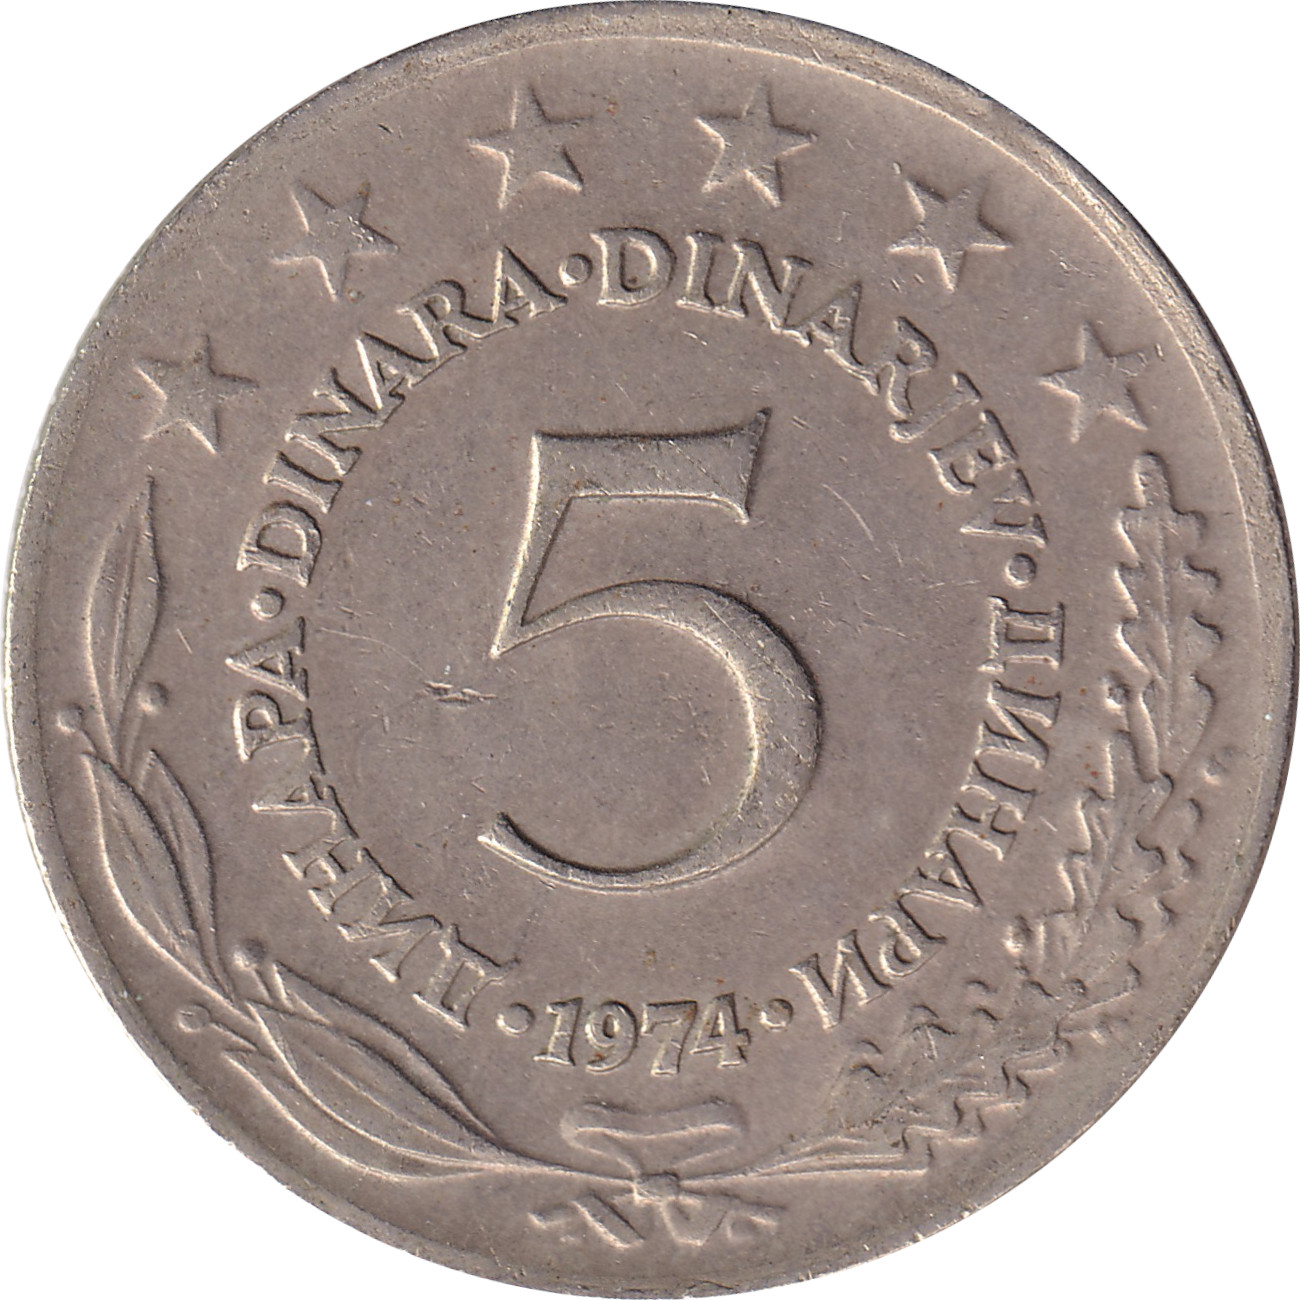 5 dinara - Emblème - Type régulier